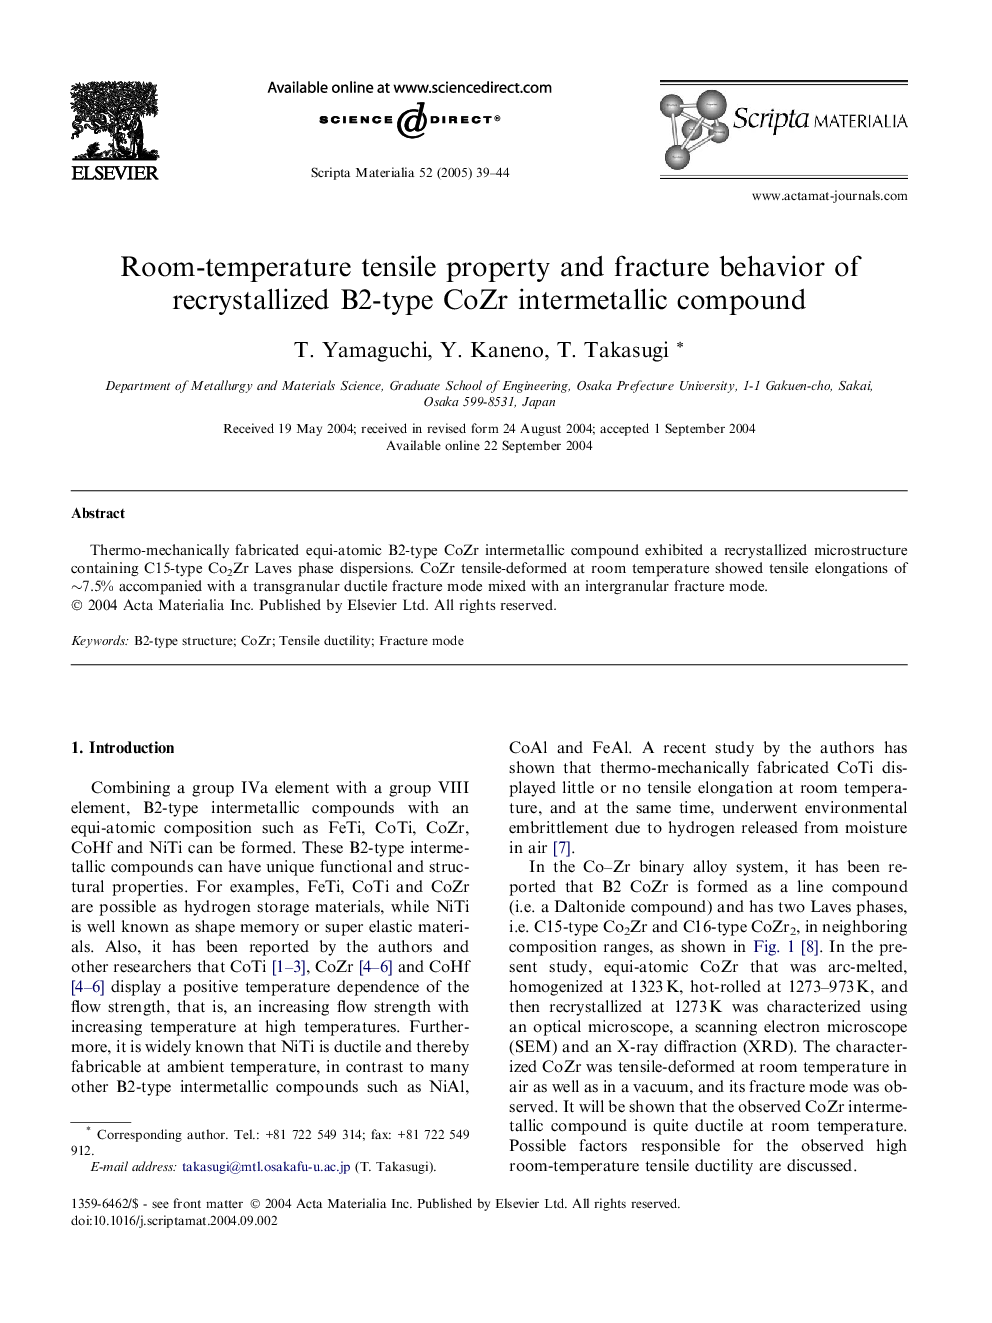 Room-temperature tensile property and fracture behavior of recrystallized B2-type CoZr intermetallic compound